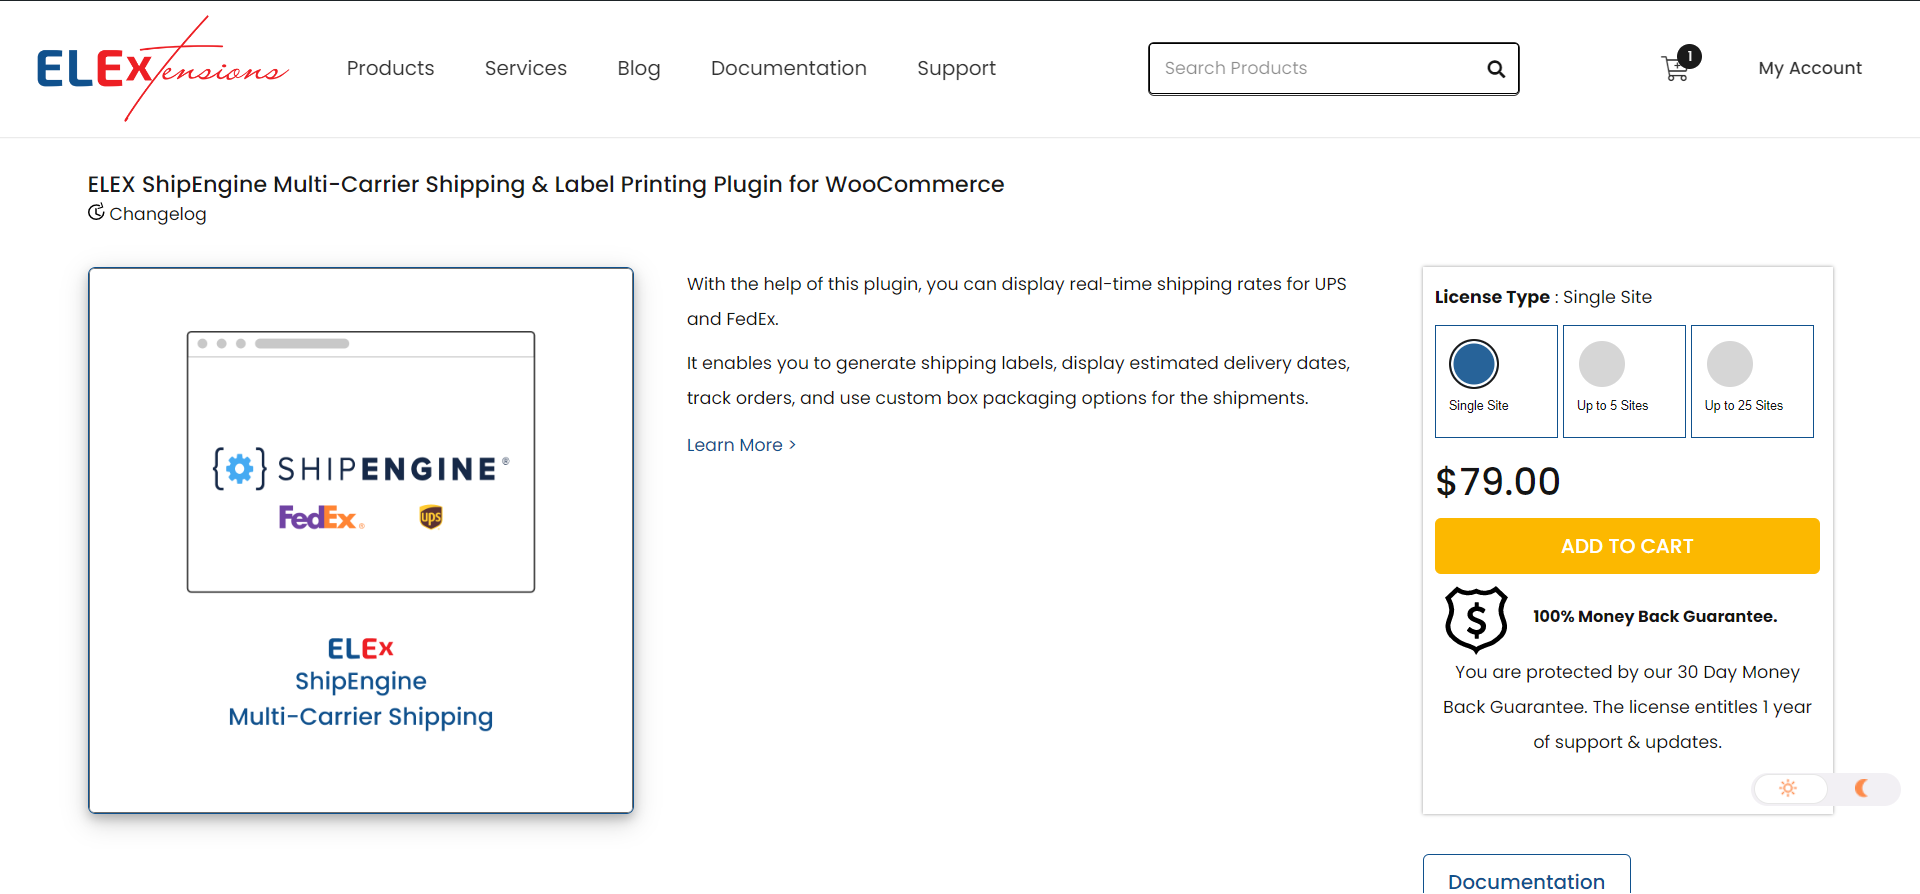 ELEX ShipEngine WooCommerce Multi-Carrier Shipping & Label Printing Plugin